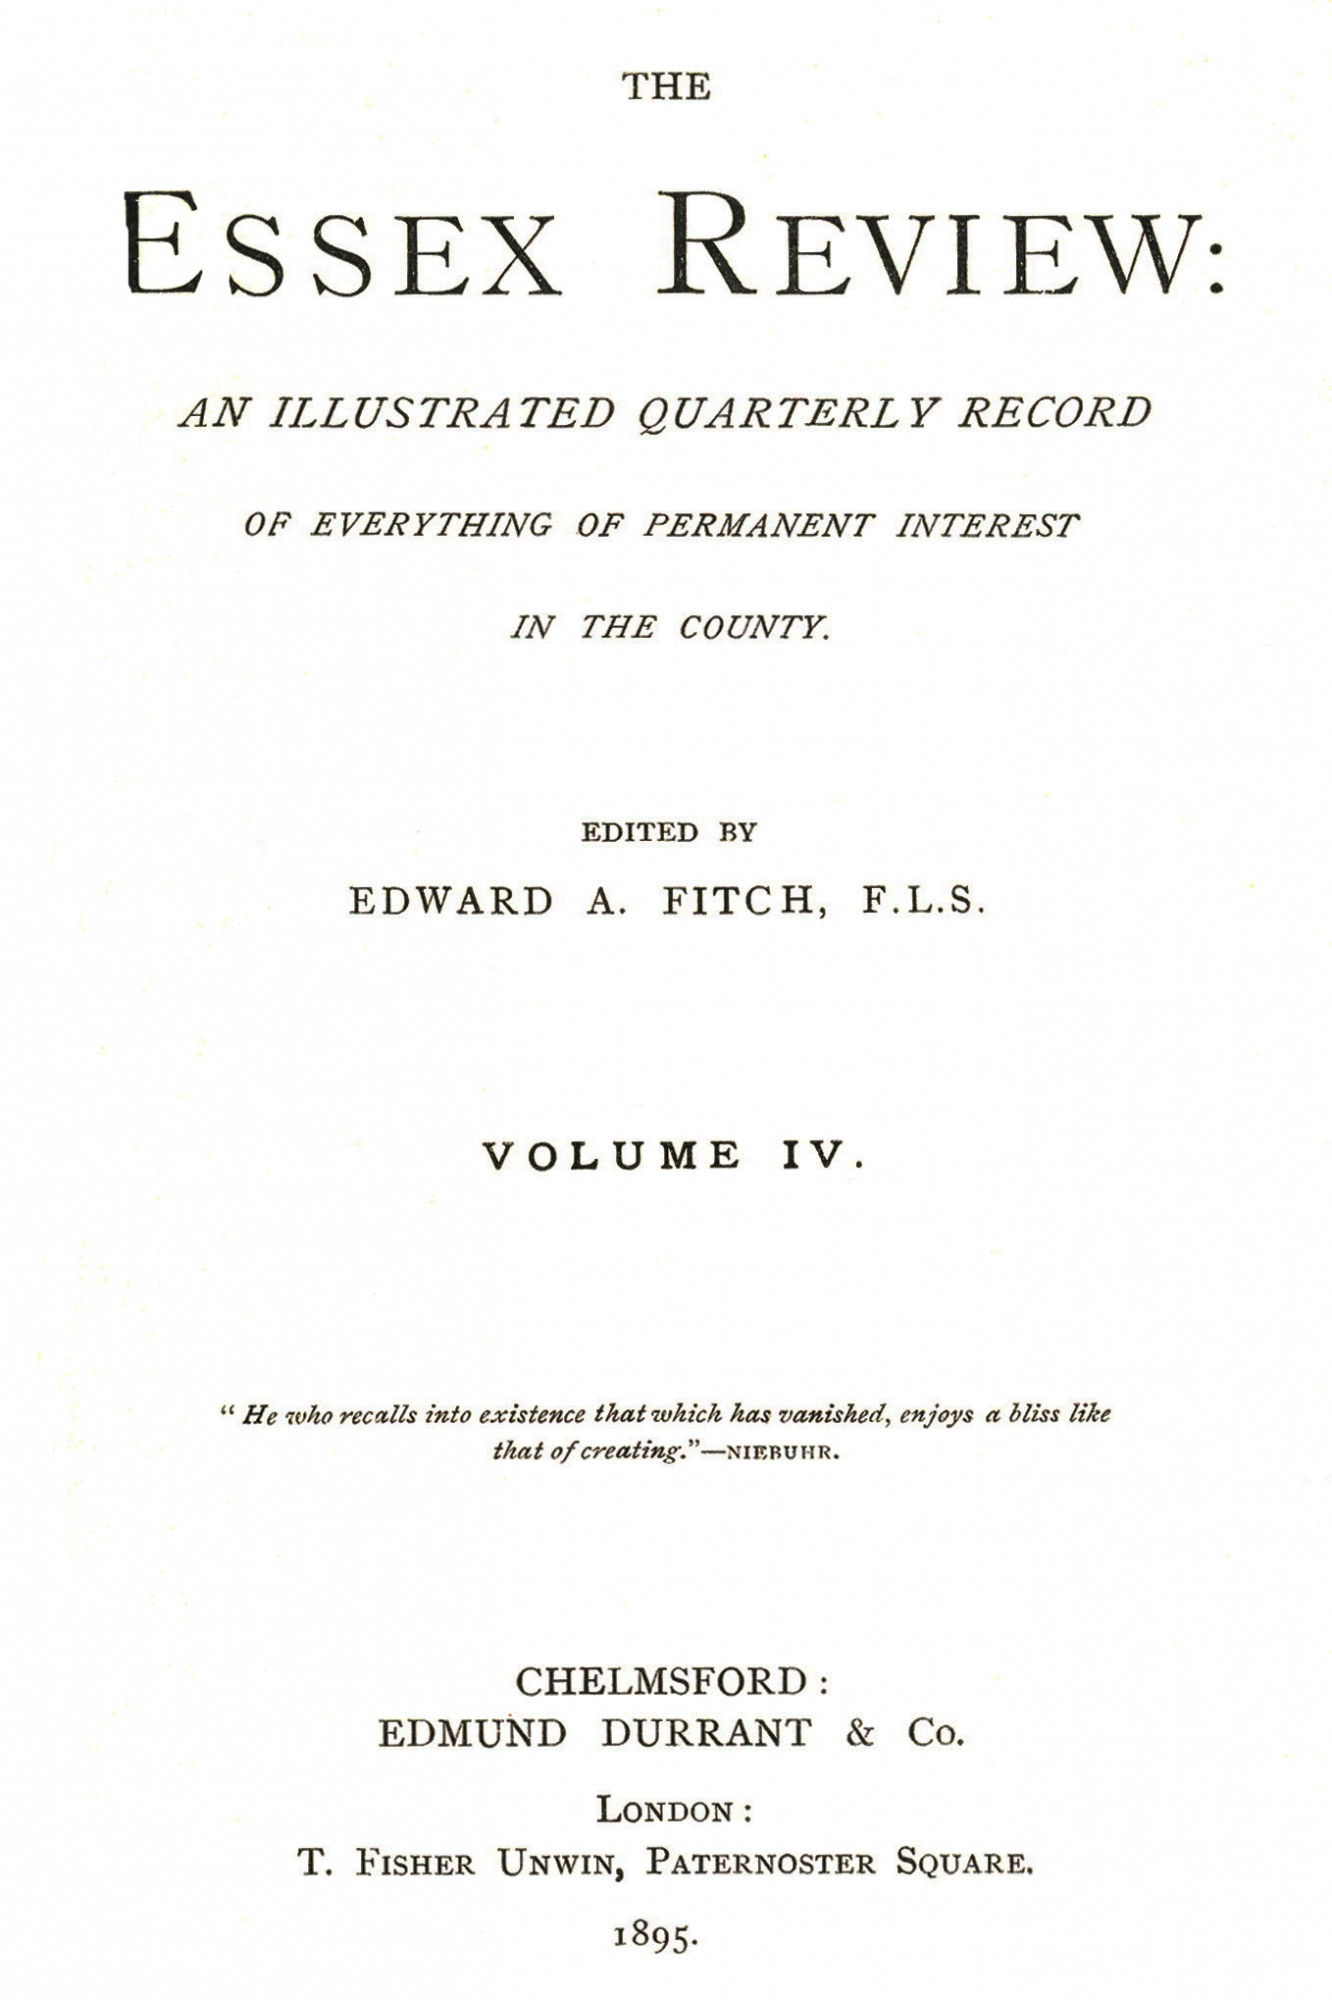 Volume 4 (1895) publications illustration 1